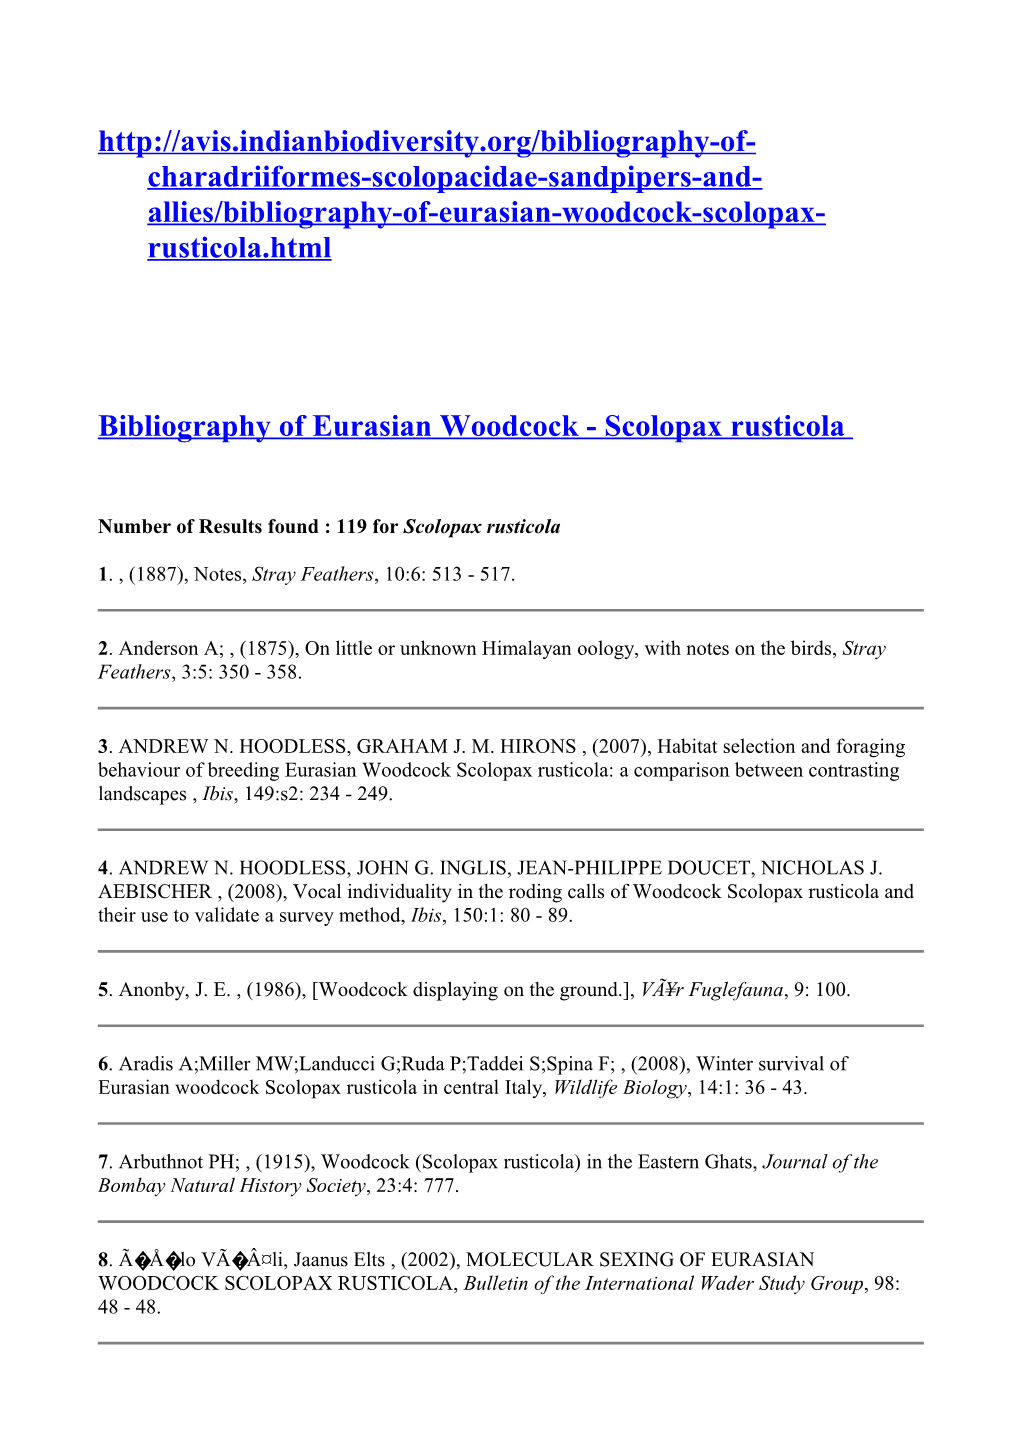 Bibliography of Eurasian Woodcock - Scolopax Rusticola